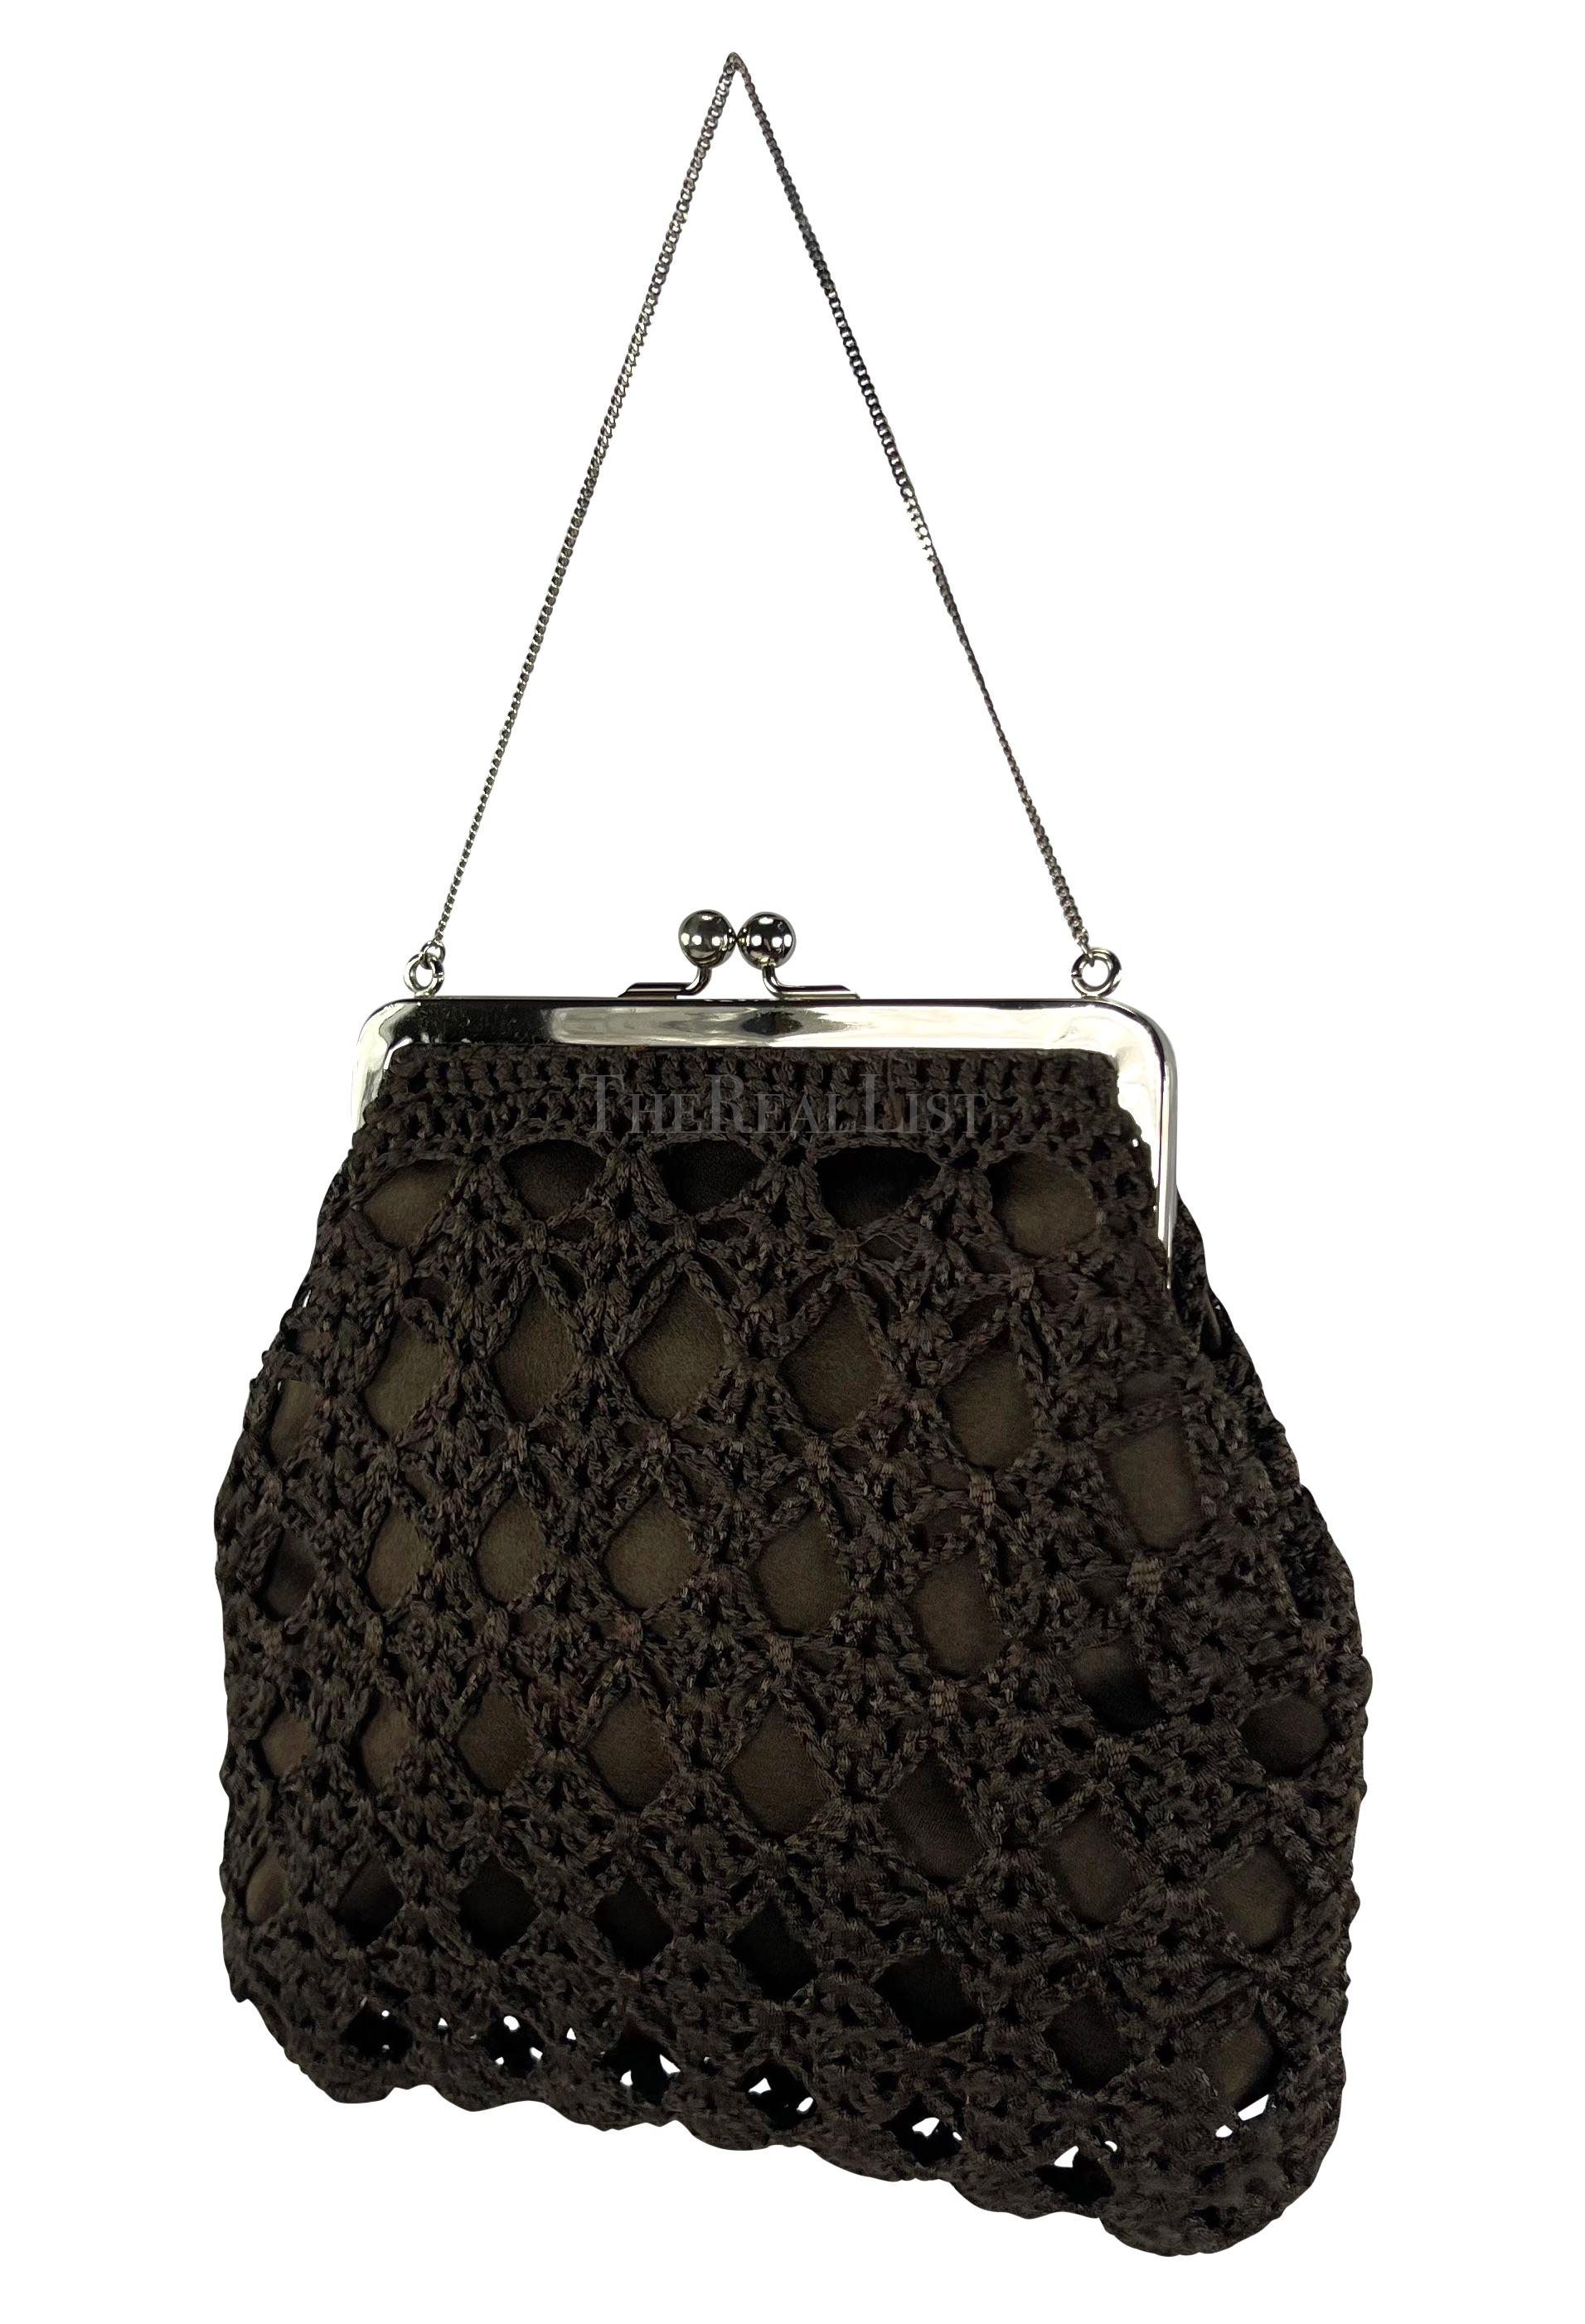 S/S 1997 Dolce & Gabbana Bown Crochet Clam Closure Mini Evening Bag For Sale 3